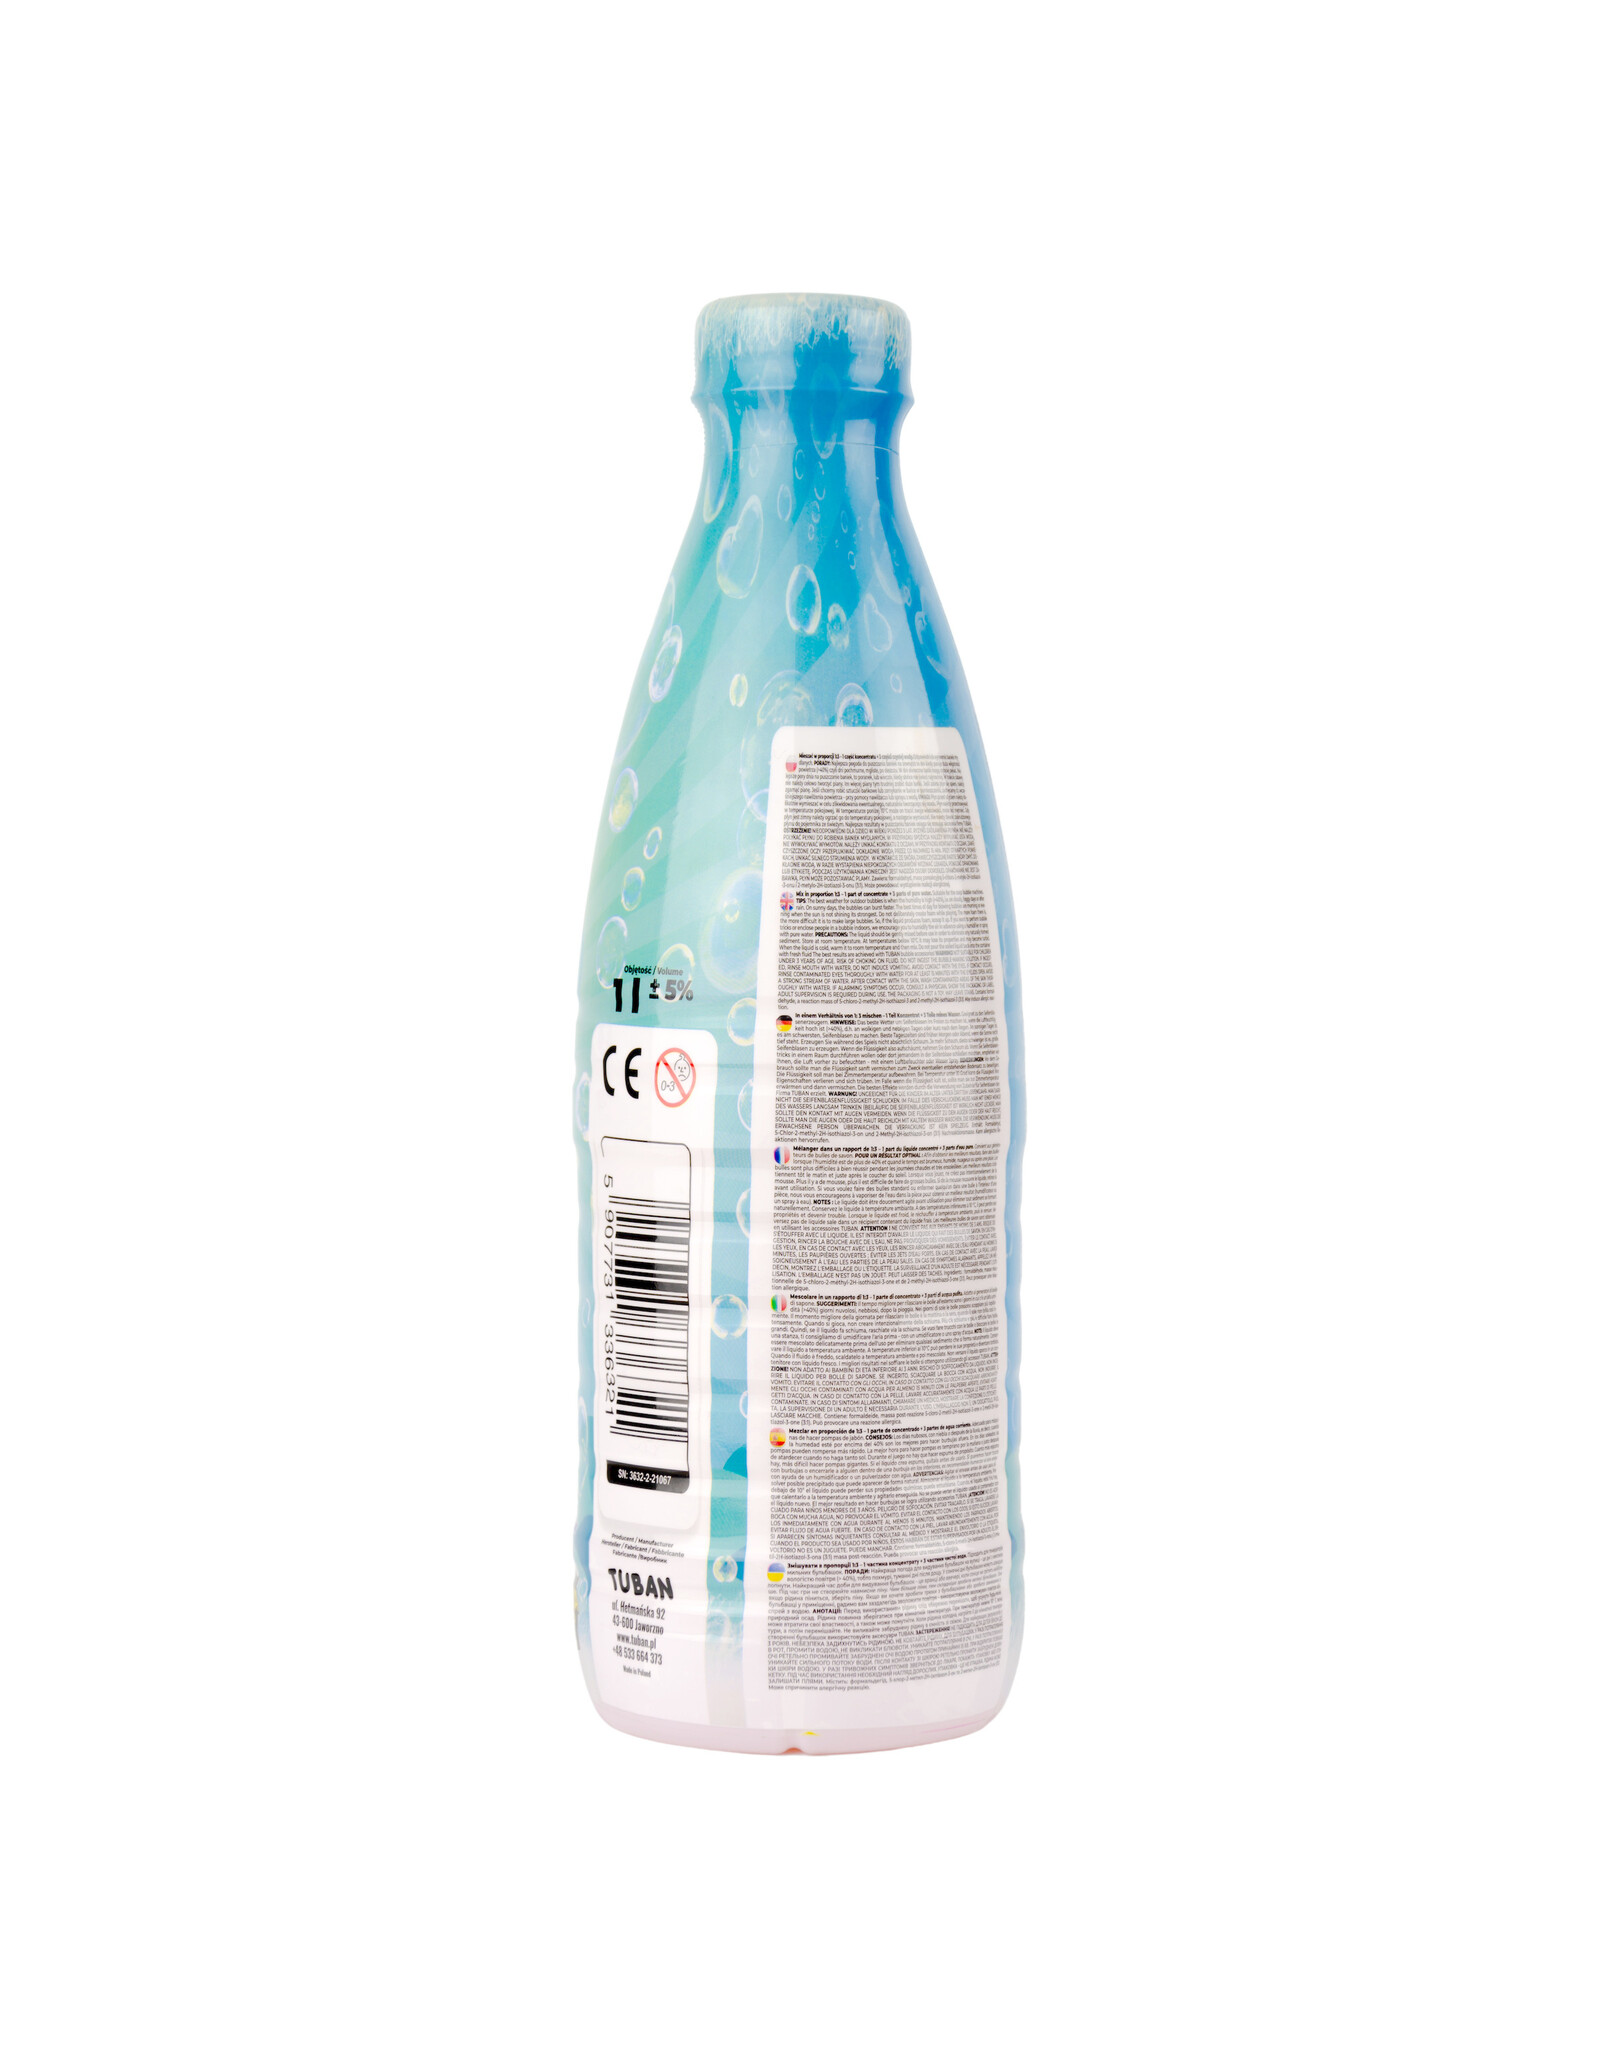 Tuban Tuban - Soap bubble liquid 1 liter concentrate